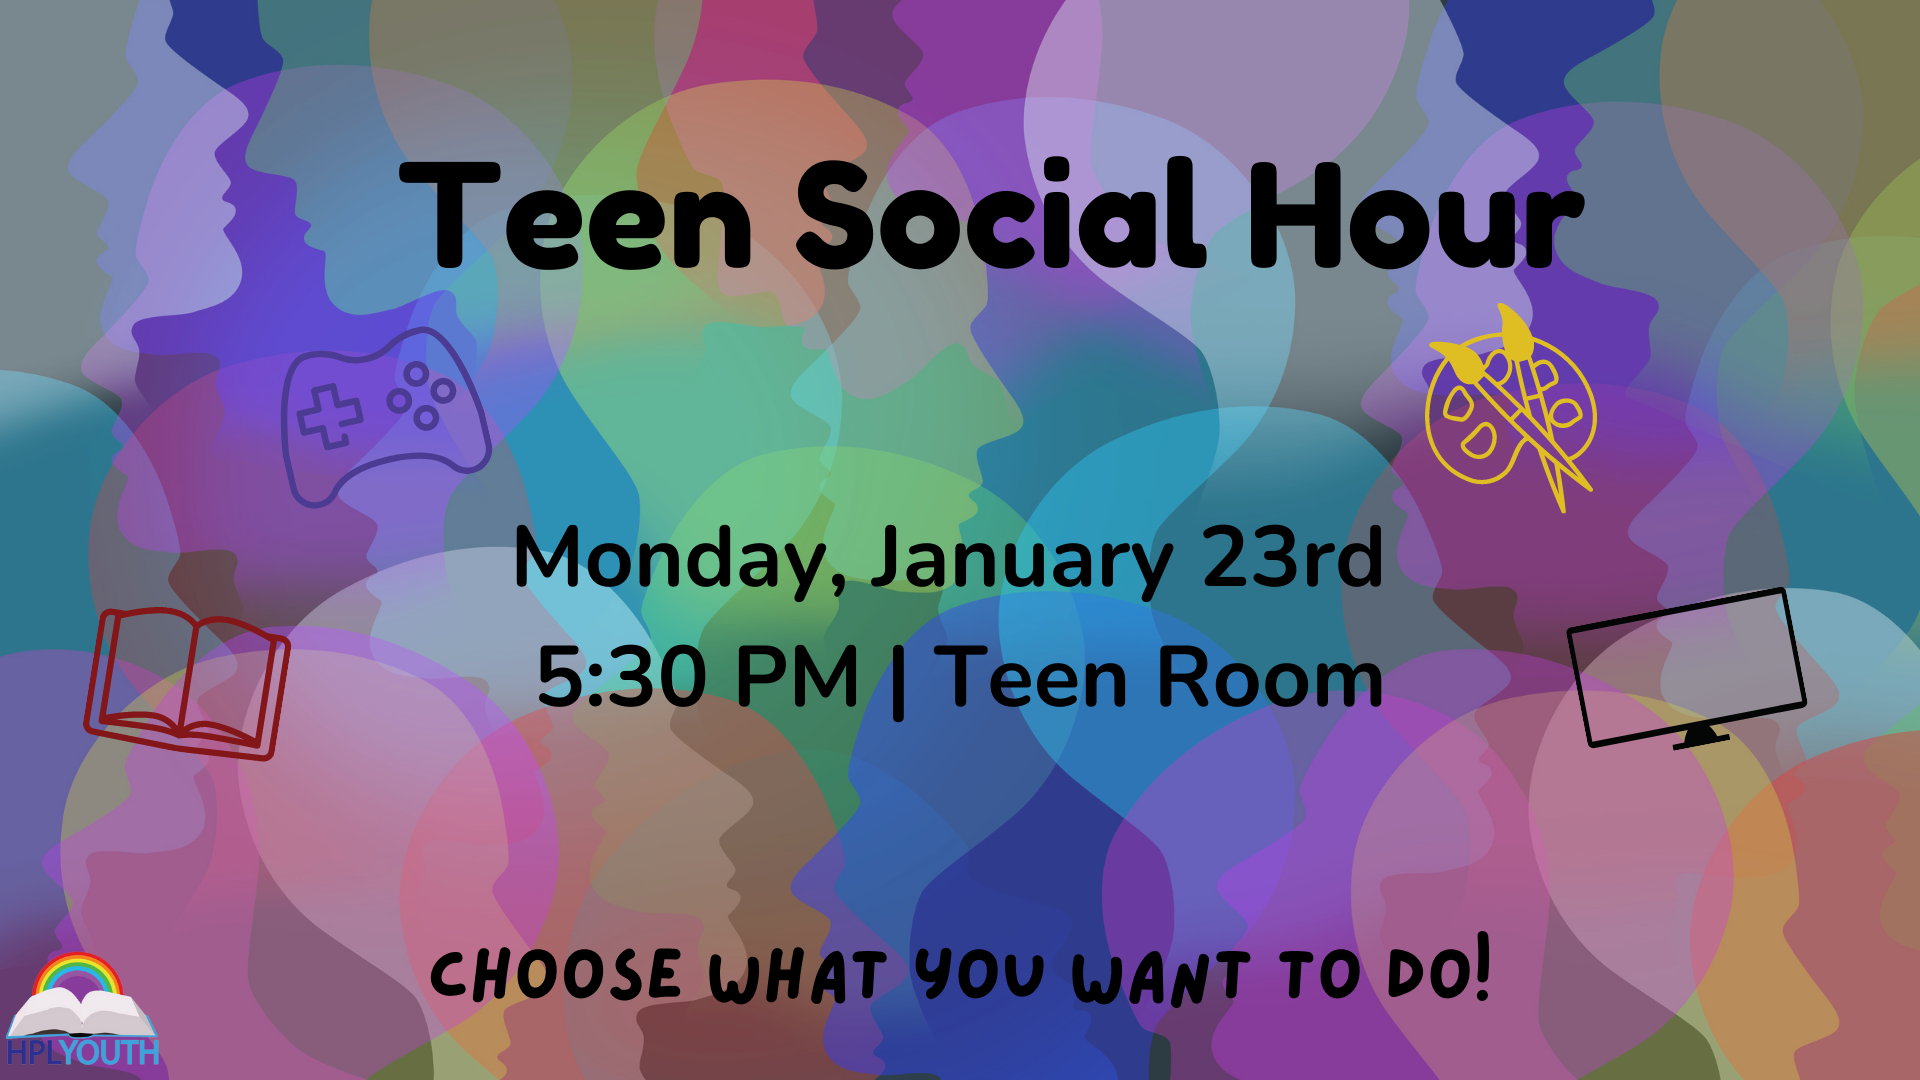 Teen Social Hour @ Harlingen Public Library